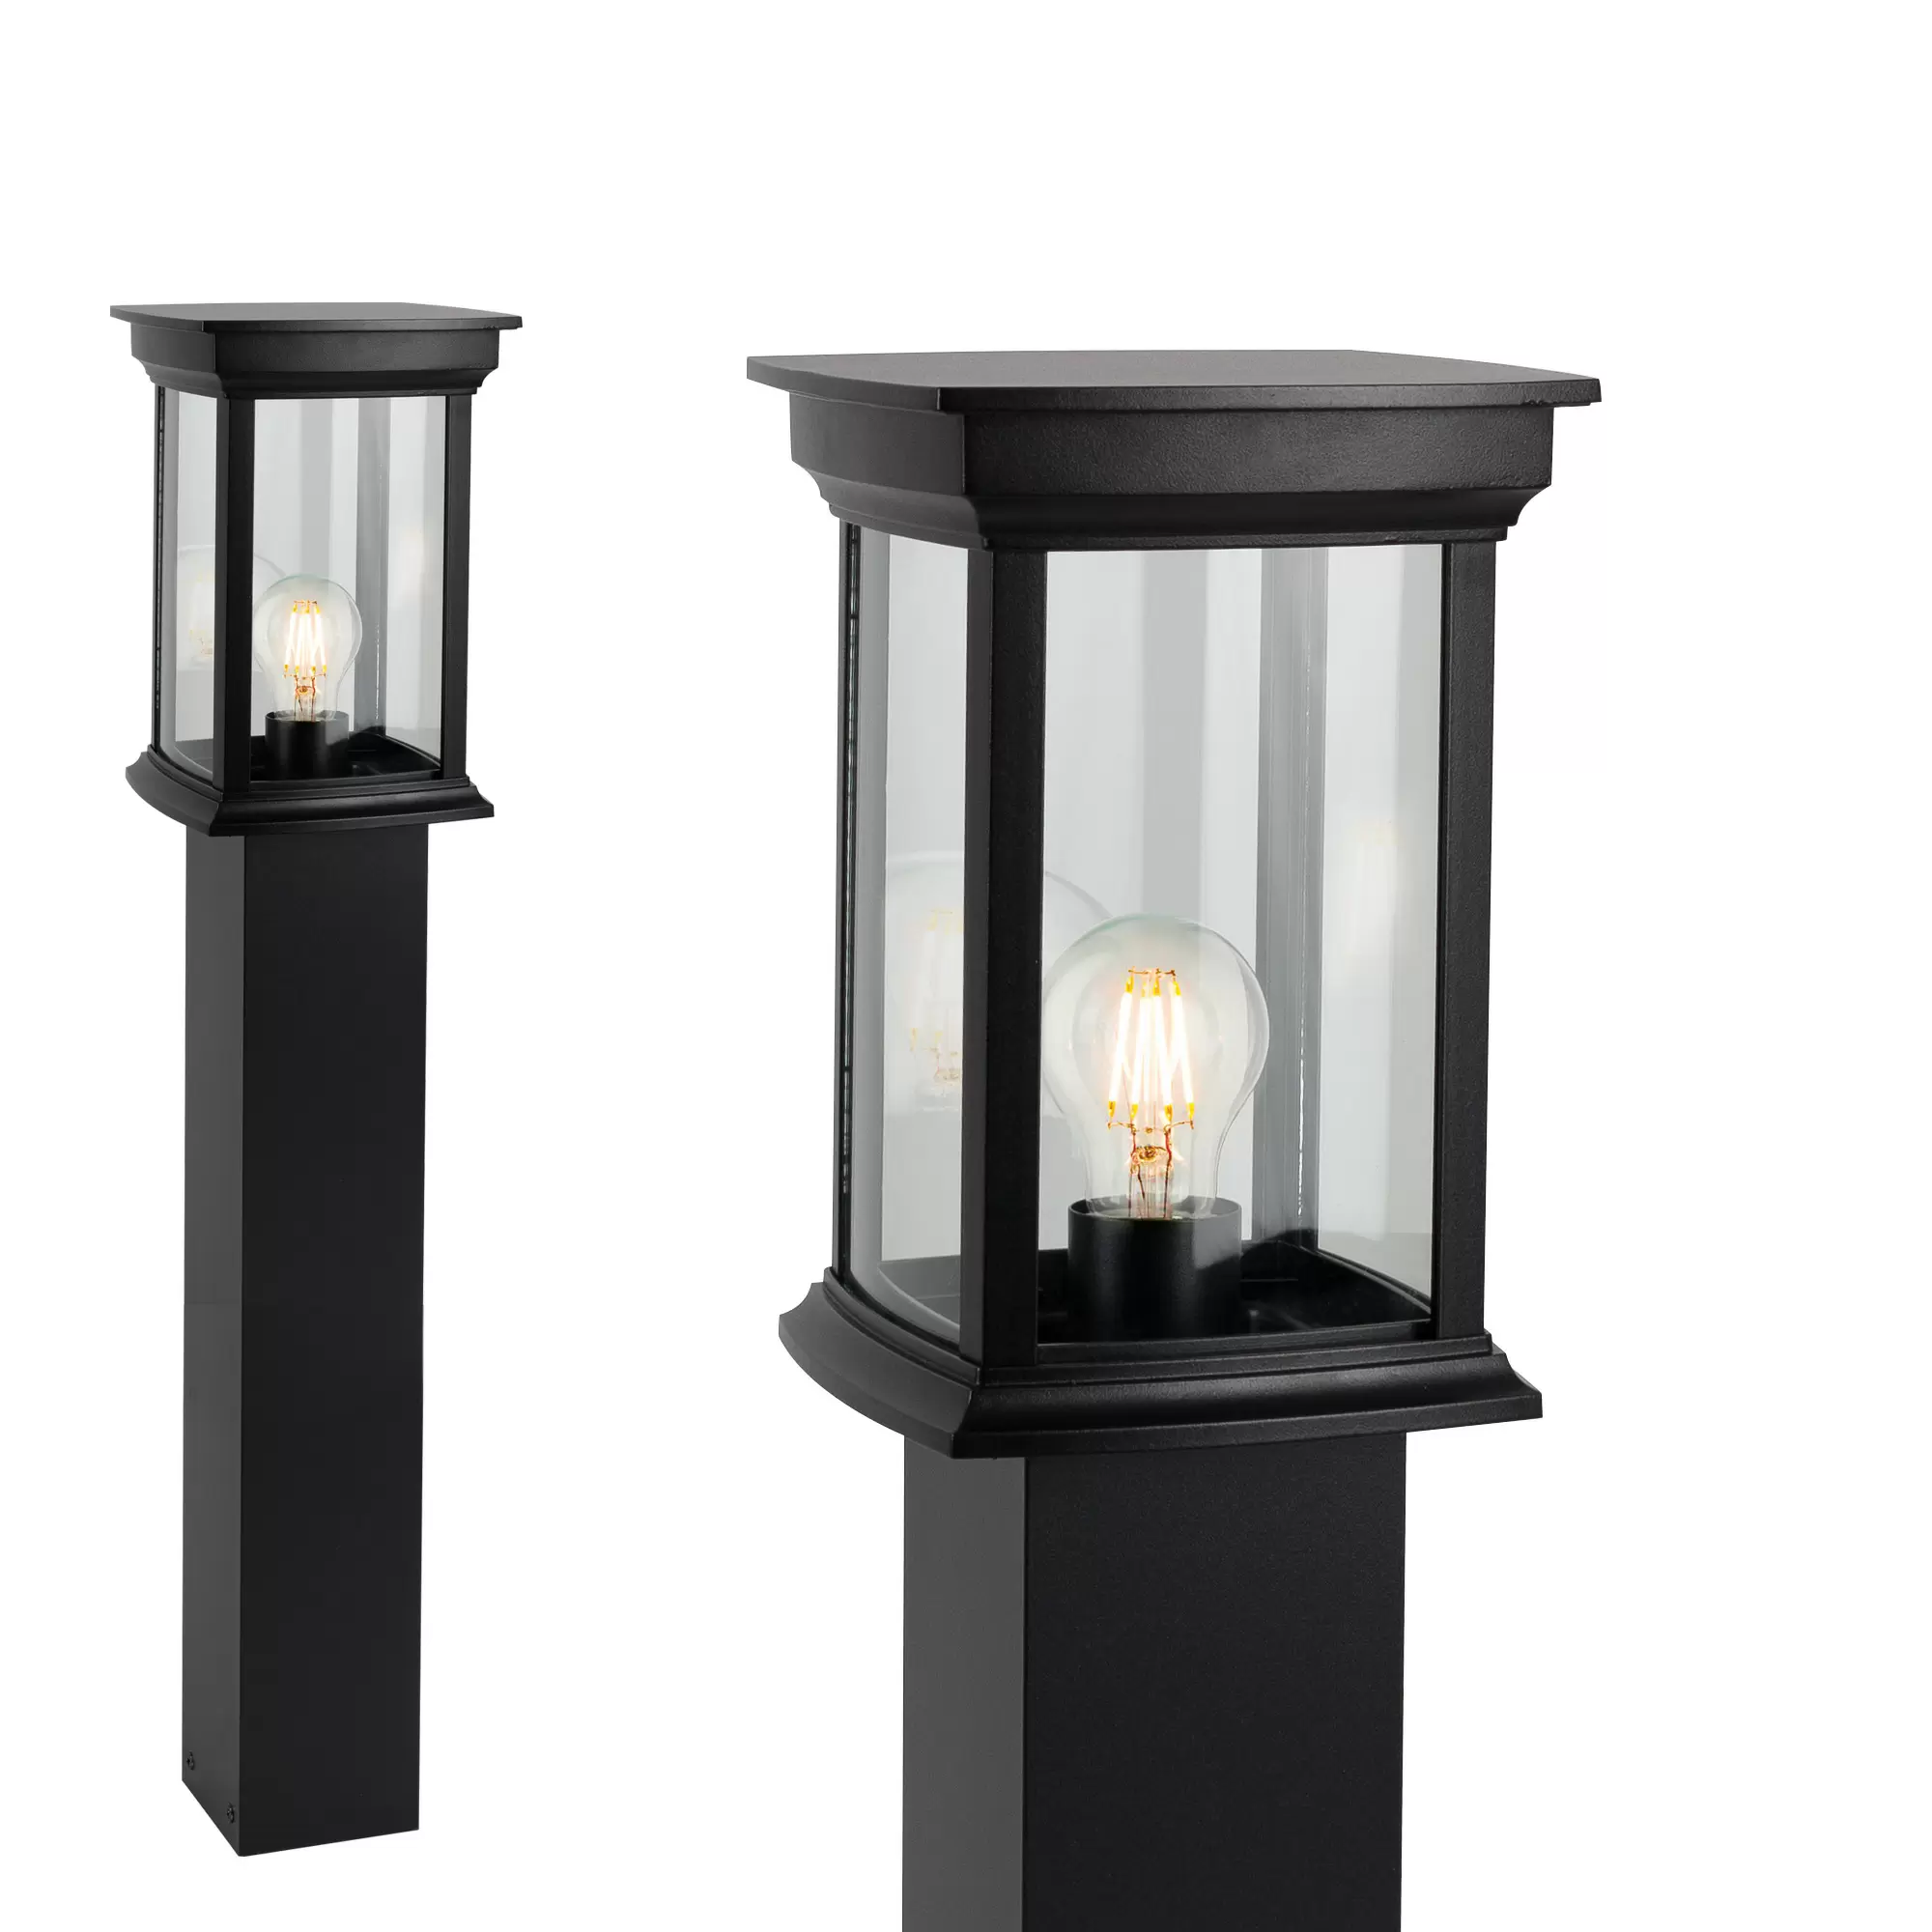 Post light Carlton | Official site KS outdoor lighting company